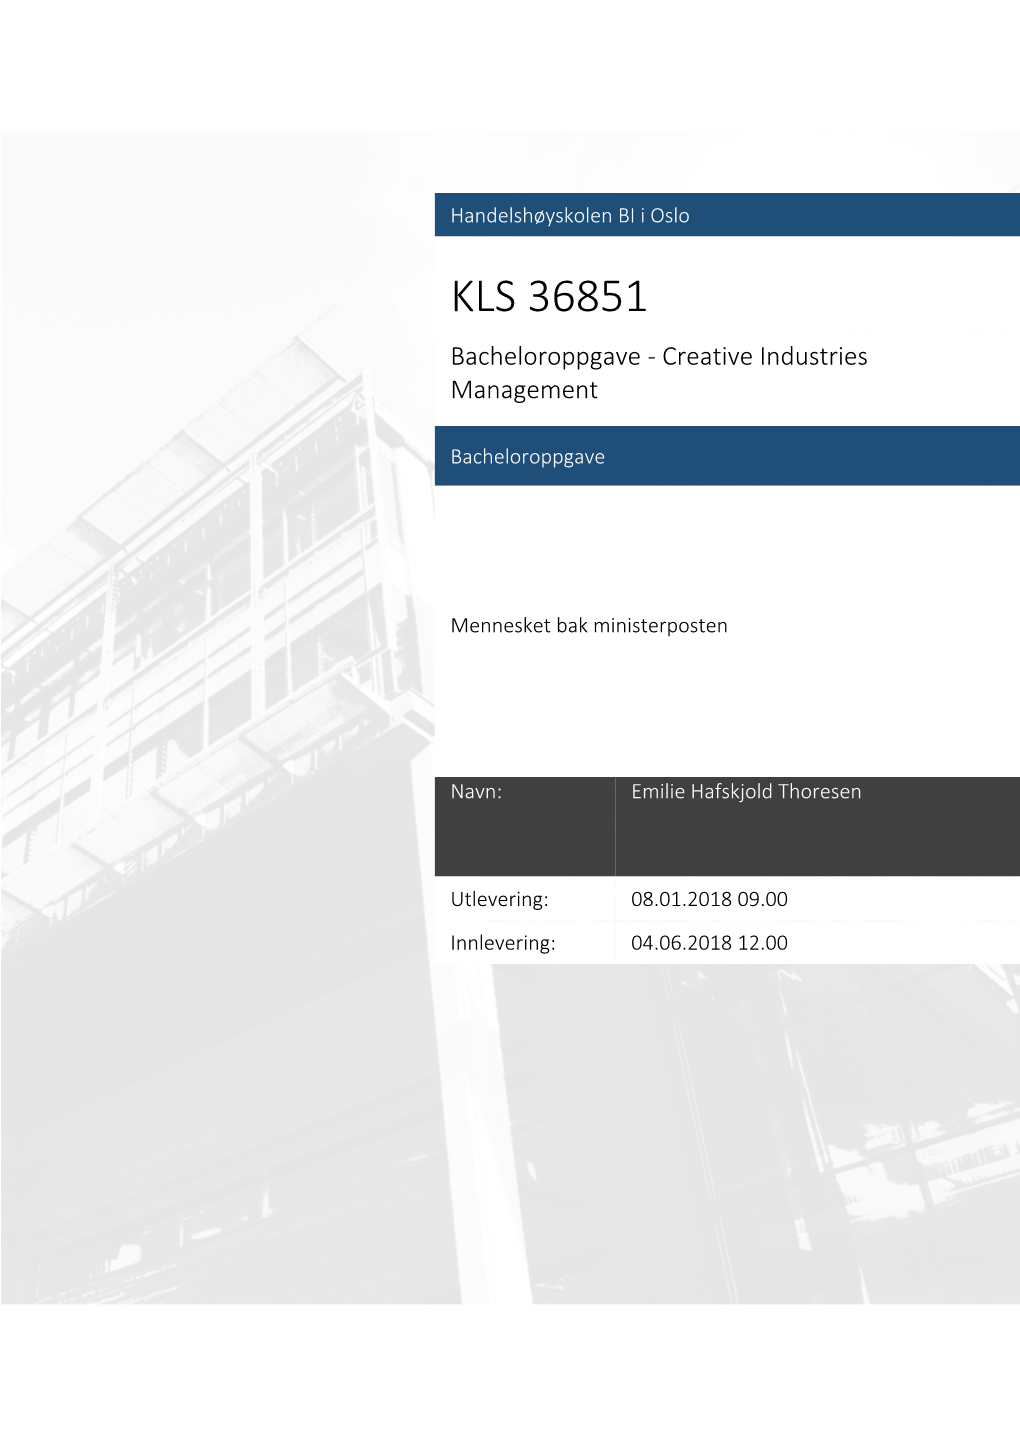 KLS 36851 Bacheloroppgave - Creative Industries Management